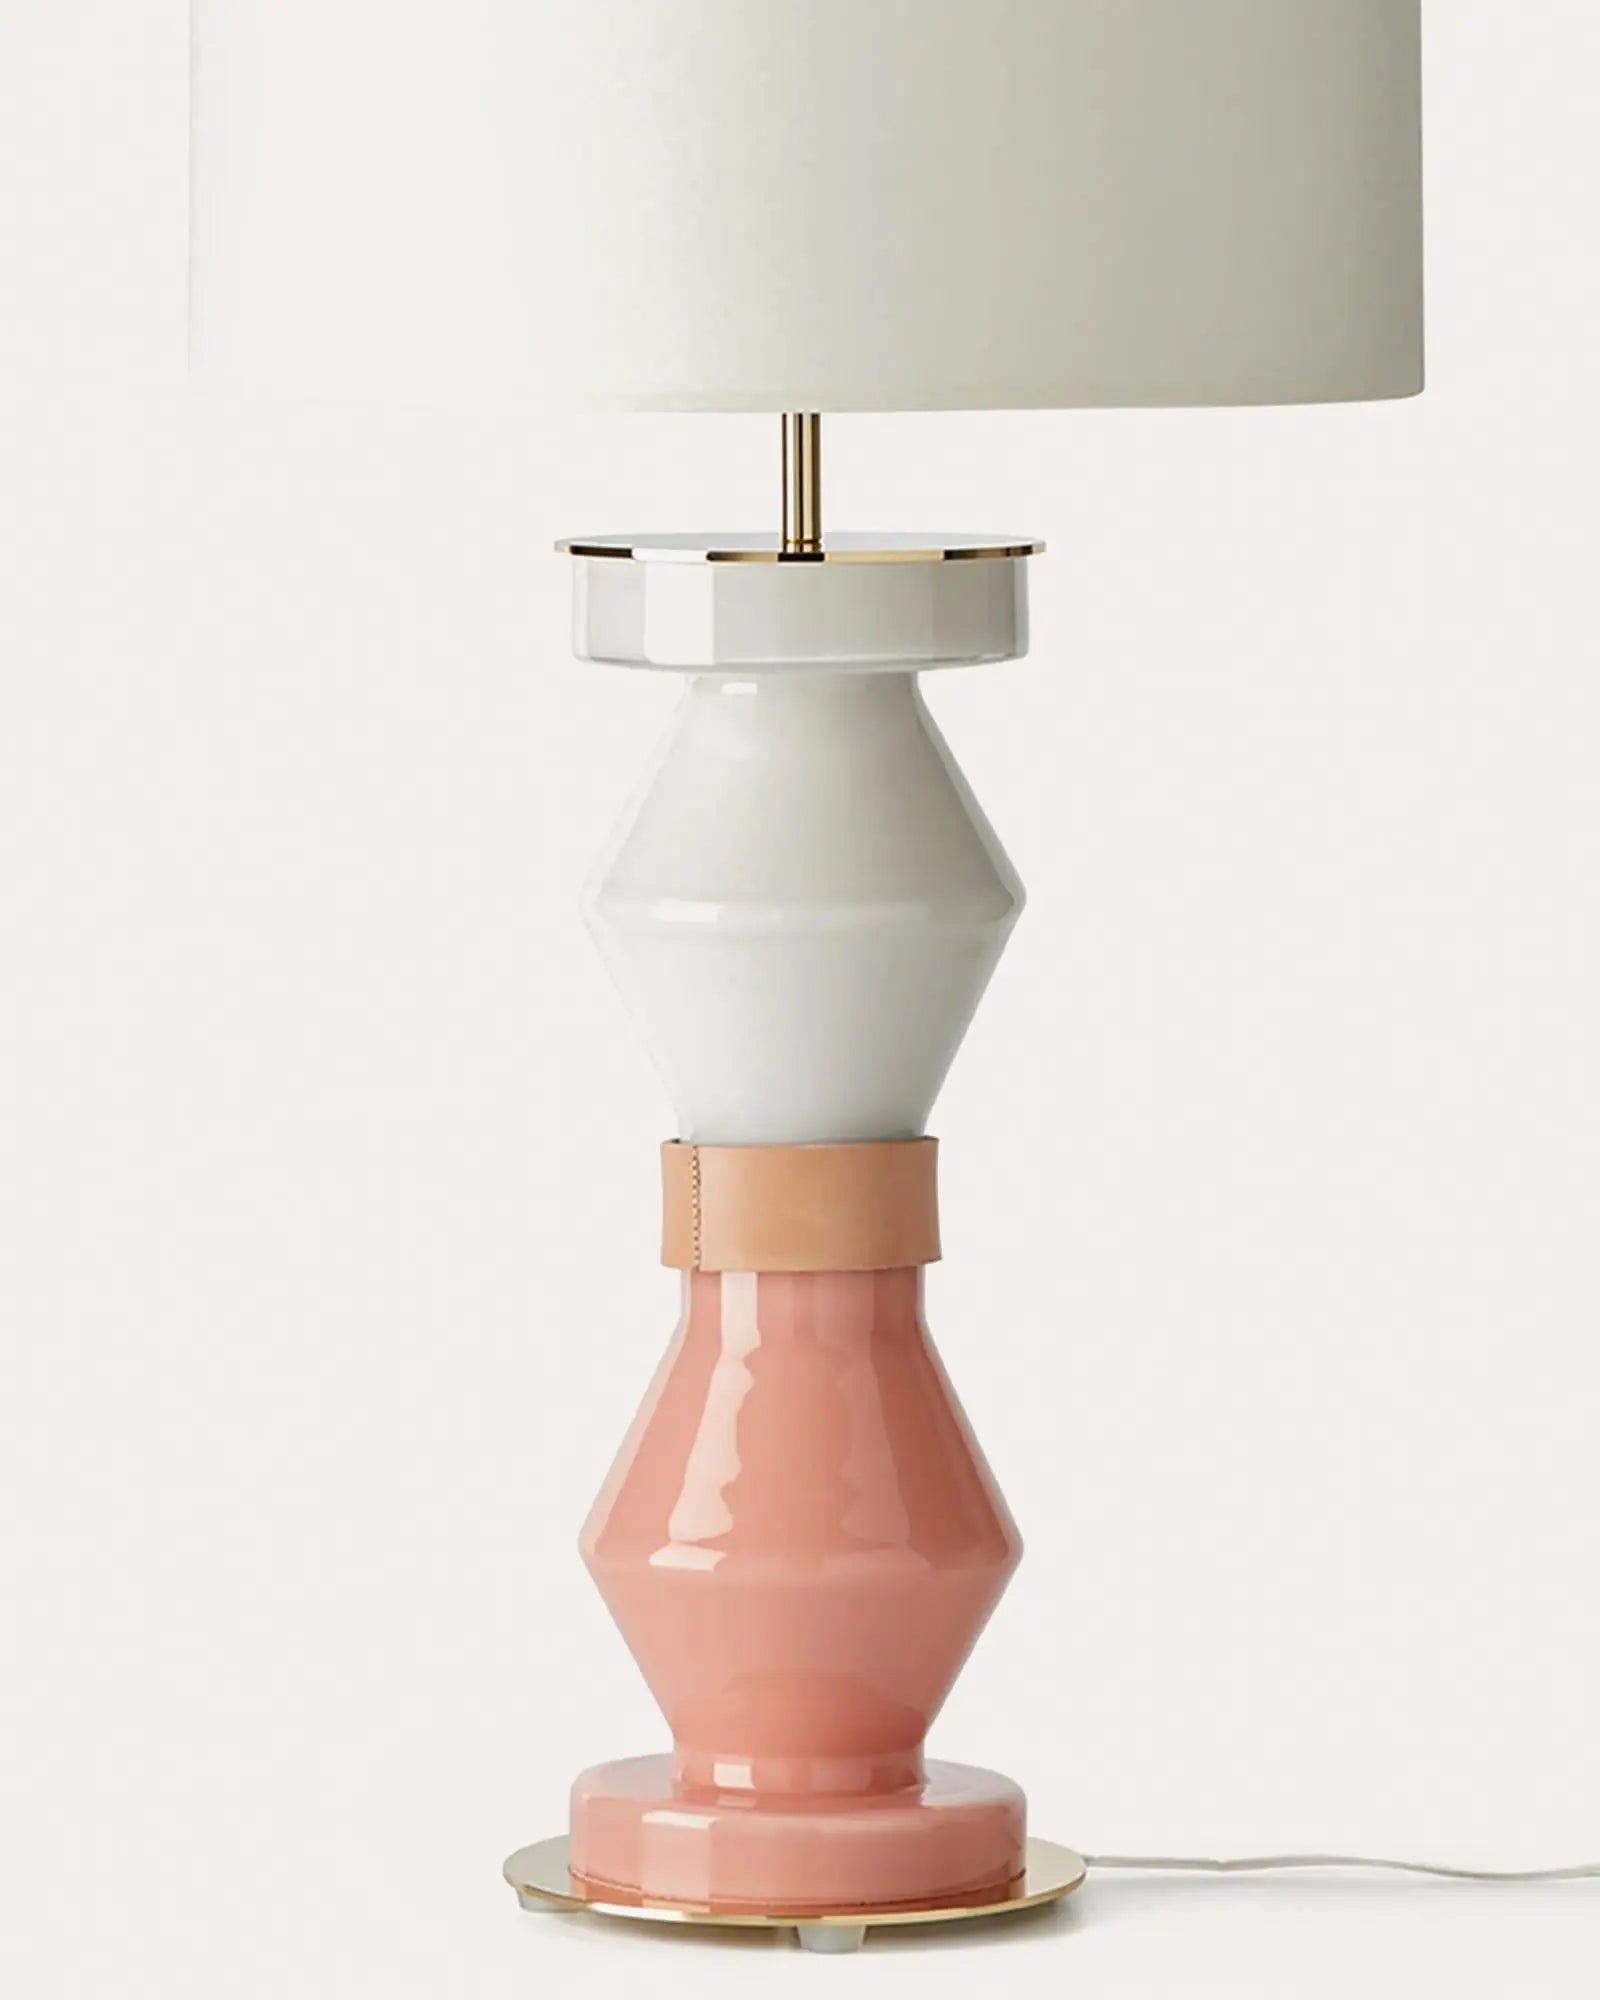 Kitta Kitta contemporary decorative table lamp in ceramic and fabric shade detail